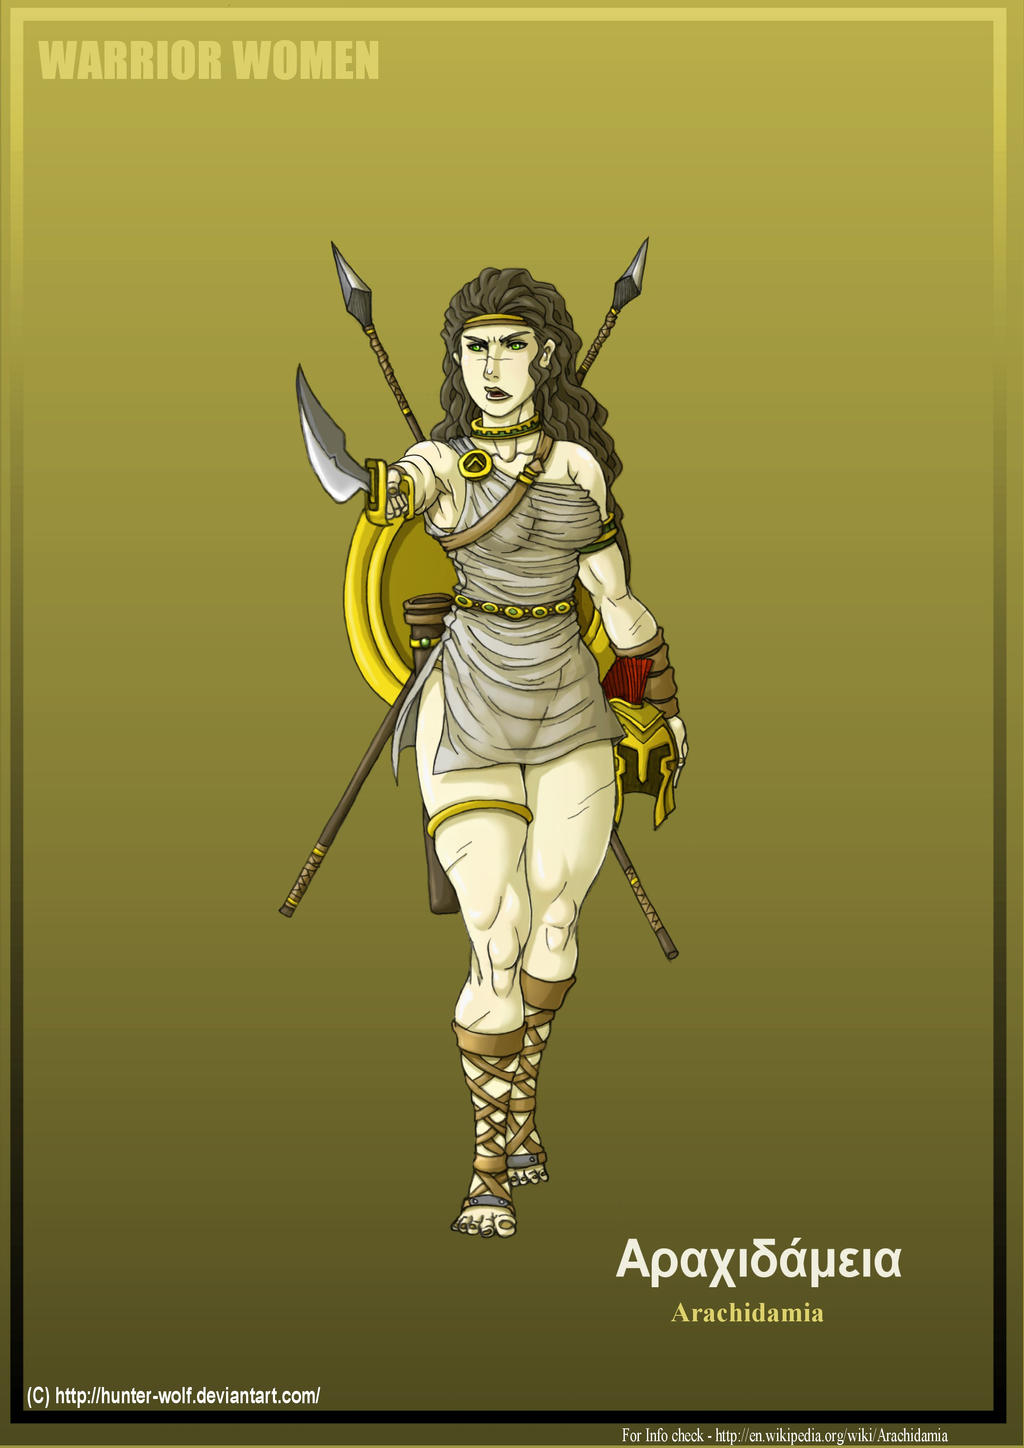 Warrior Women: Arachidamia The Spartan Princess